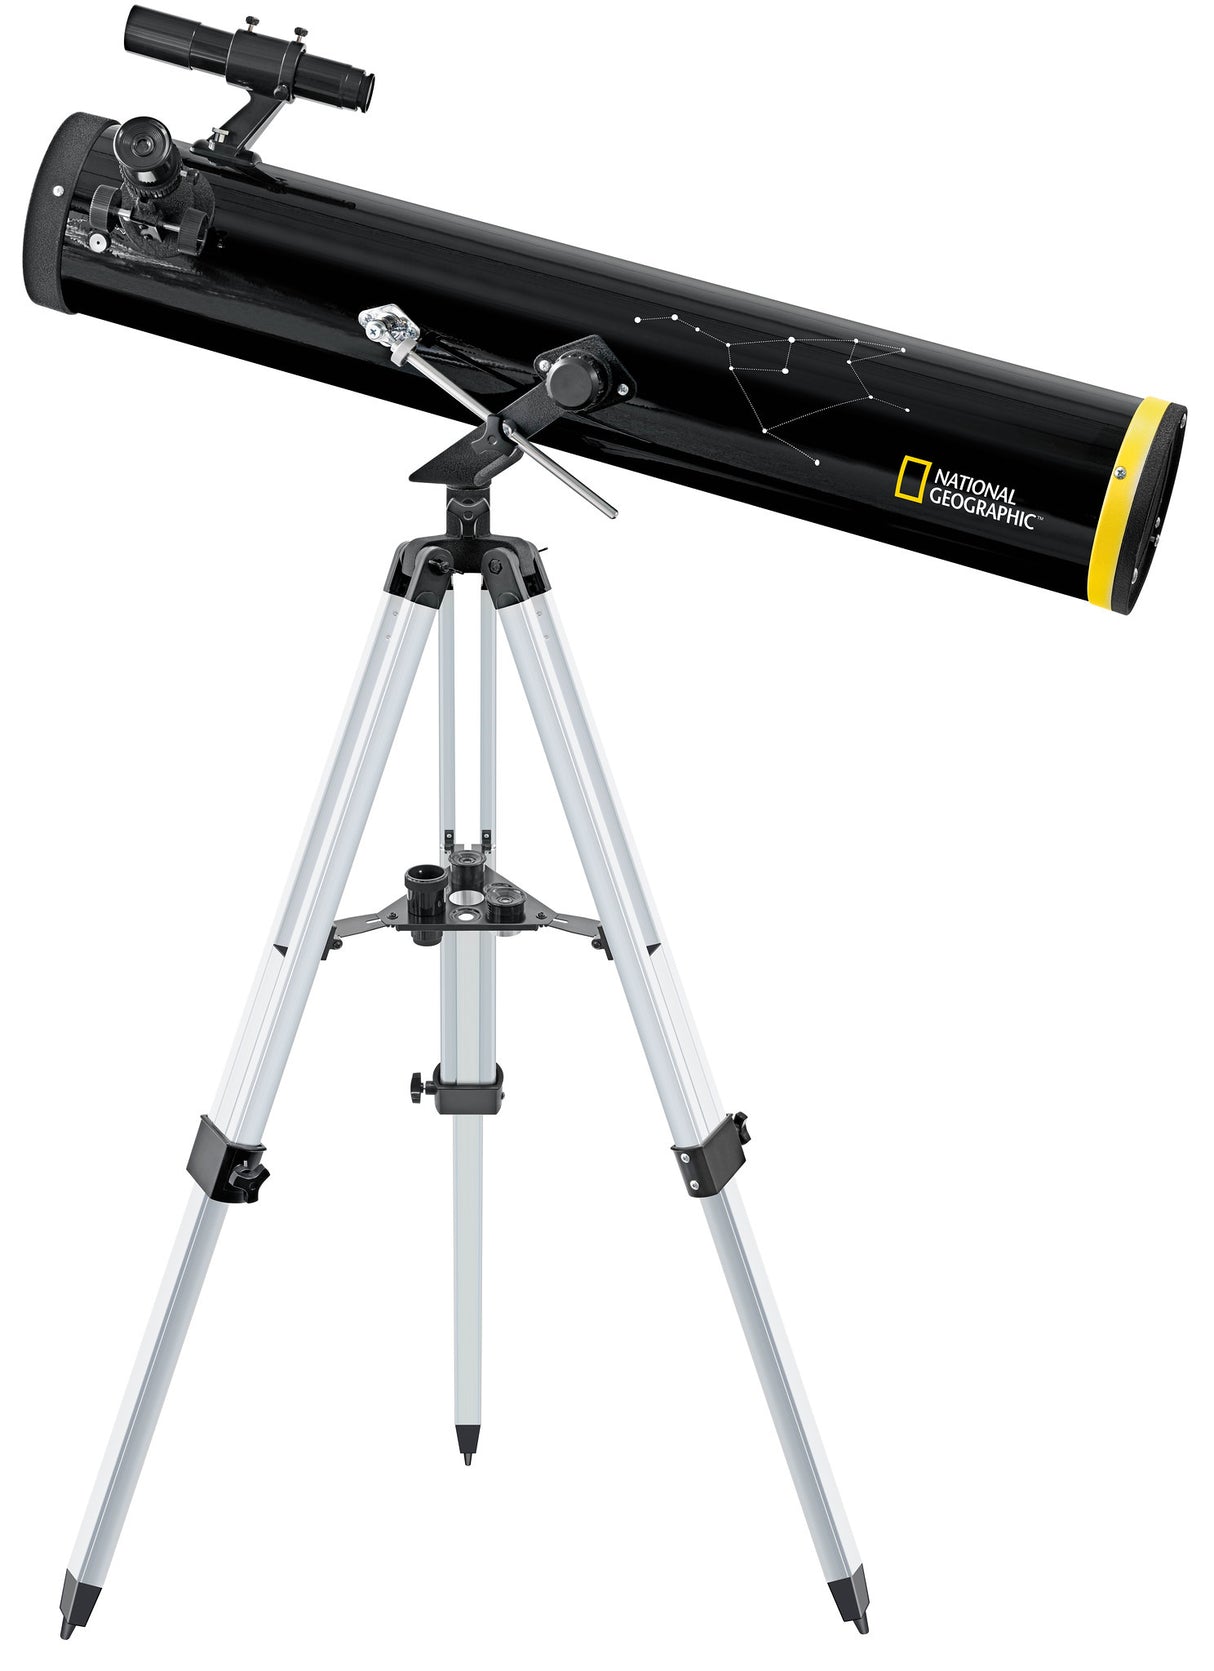 114X900 Reflector Telescope